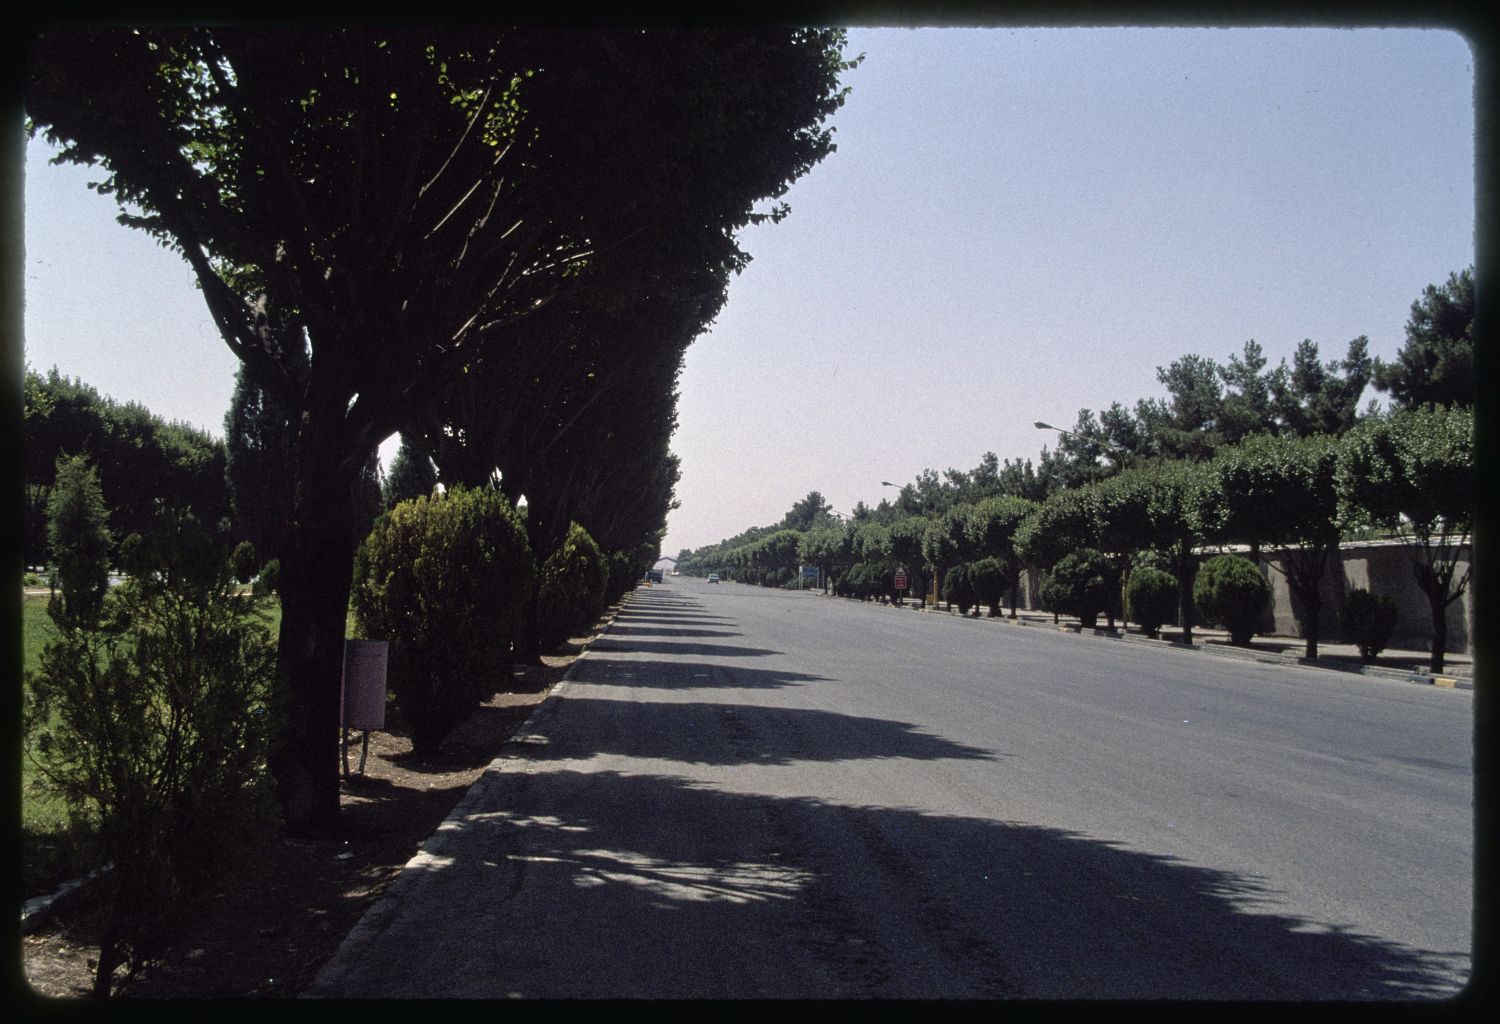 Bihisht-i Zahra - View along road, looking west.